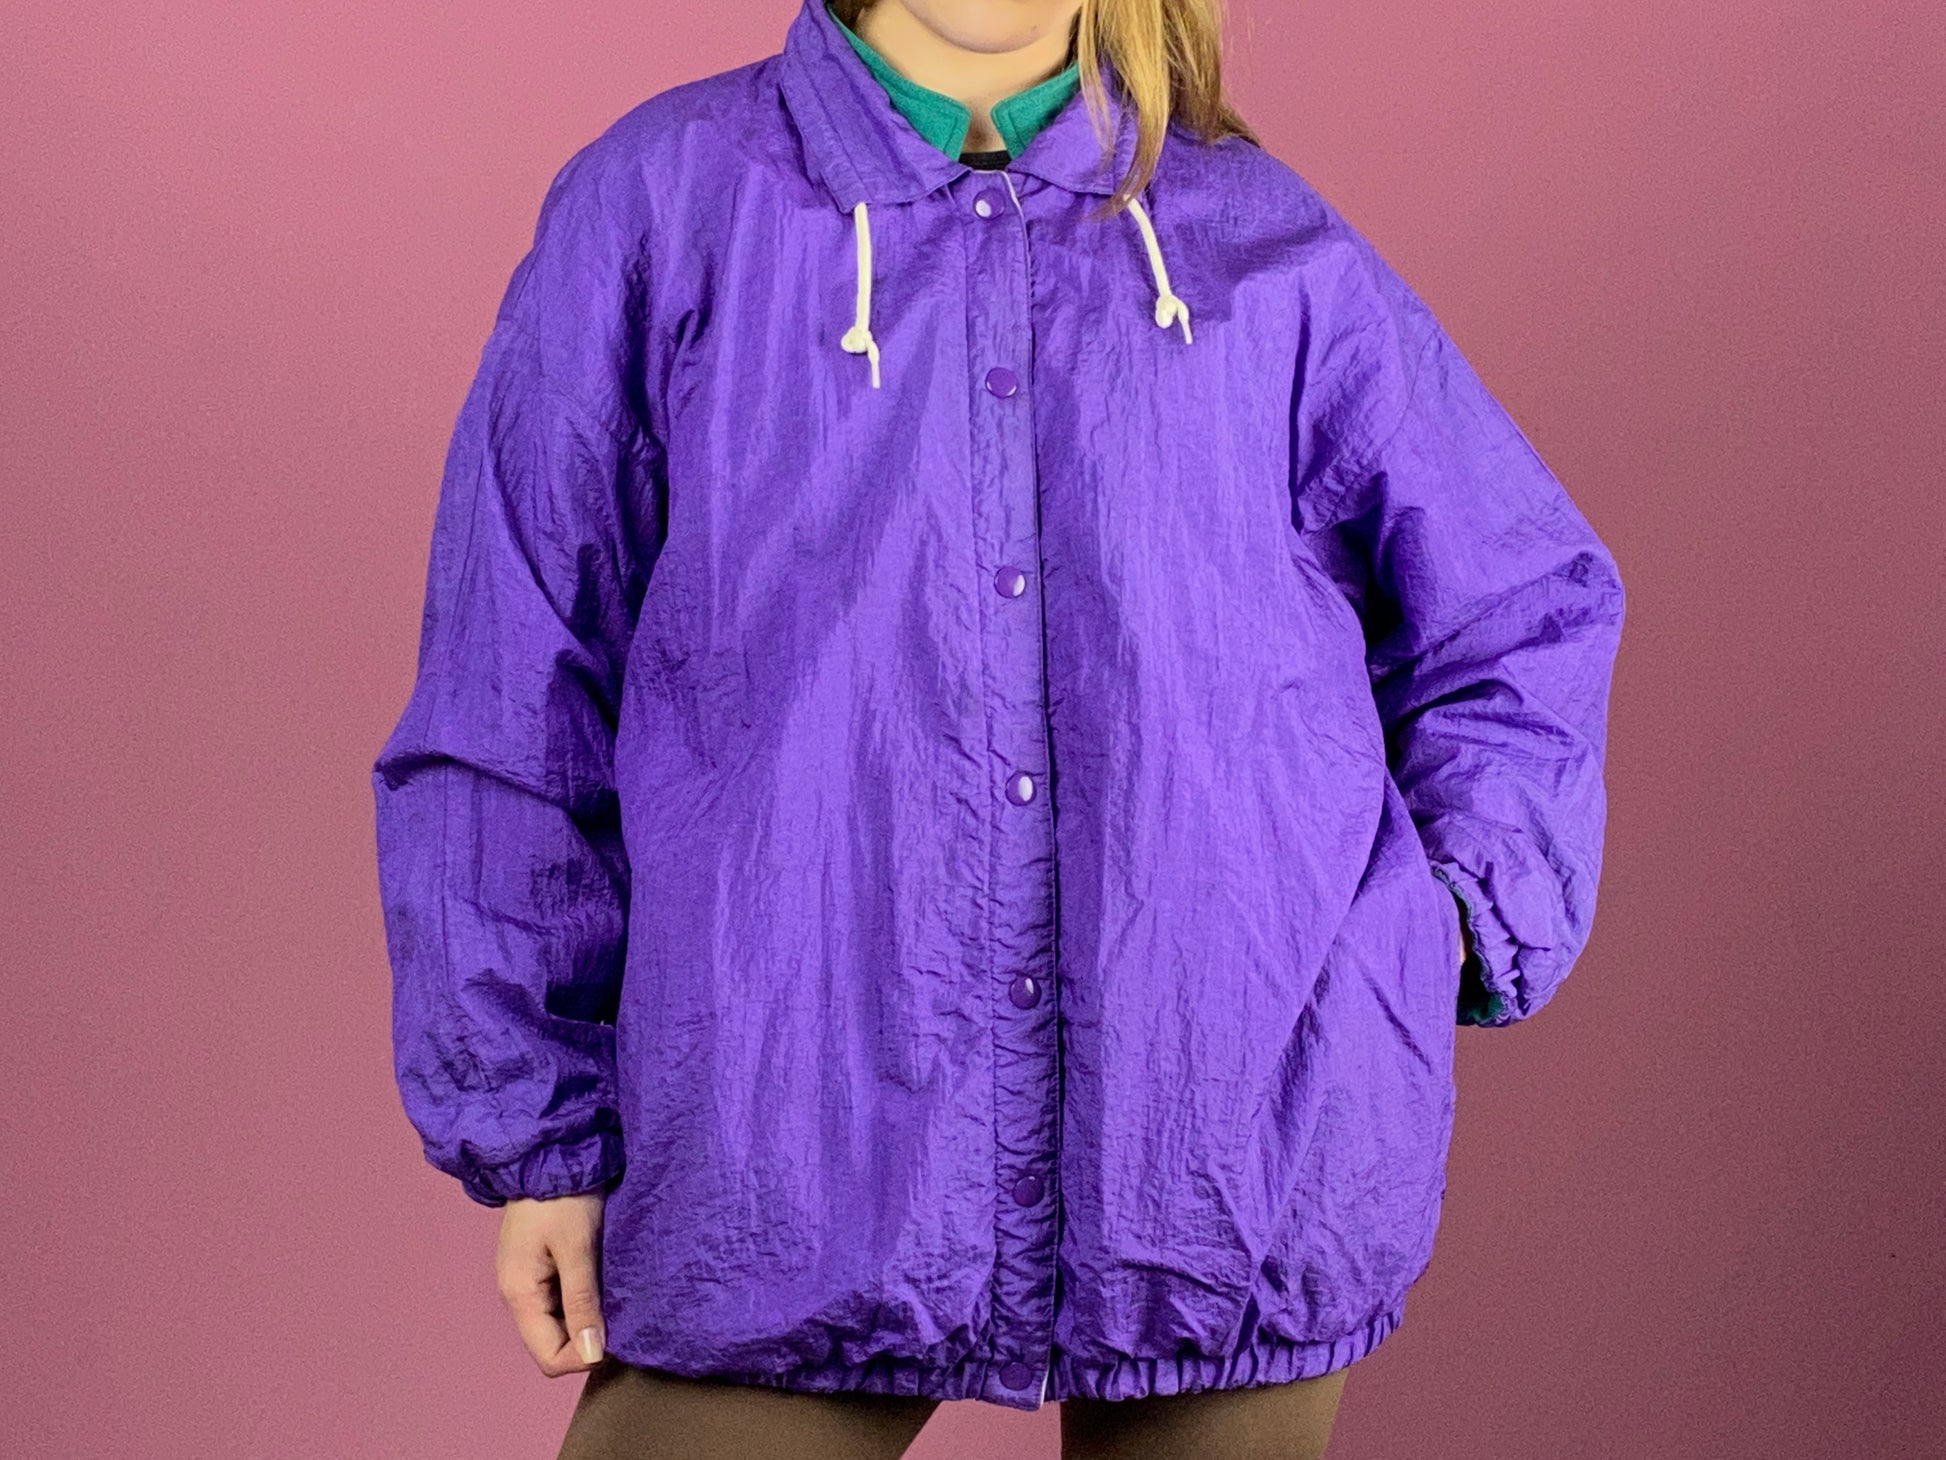 90s Vintage Women's Windbreaker Jacket - Medium Purple Nylon